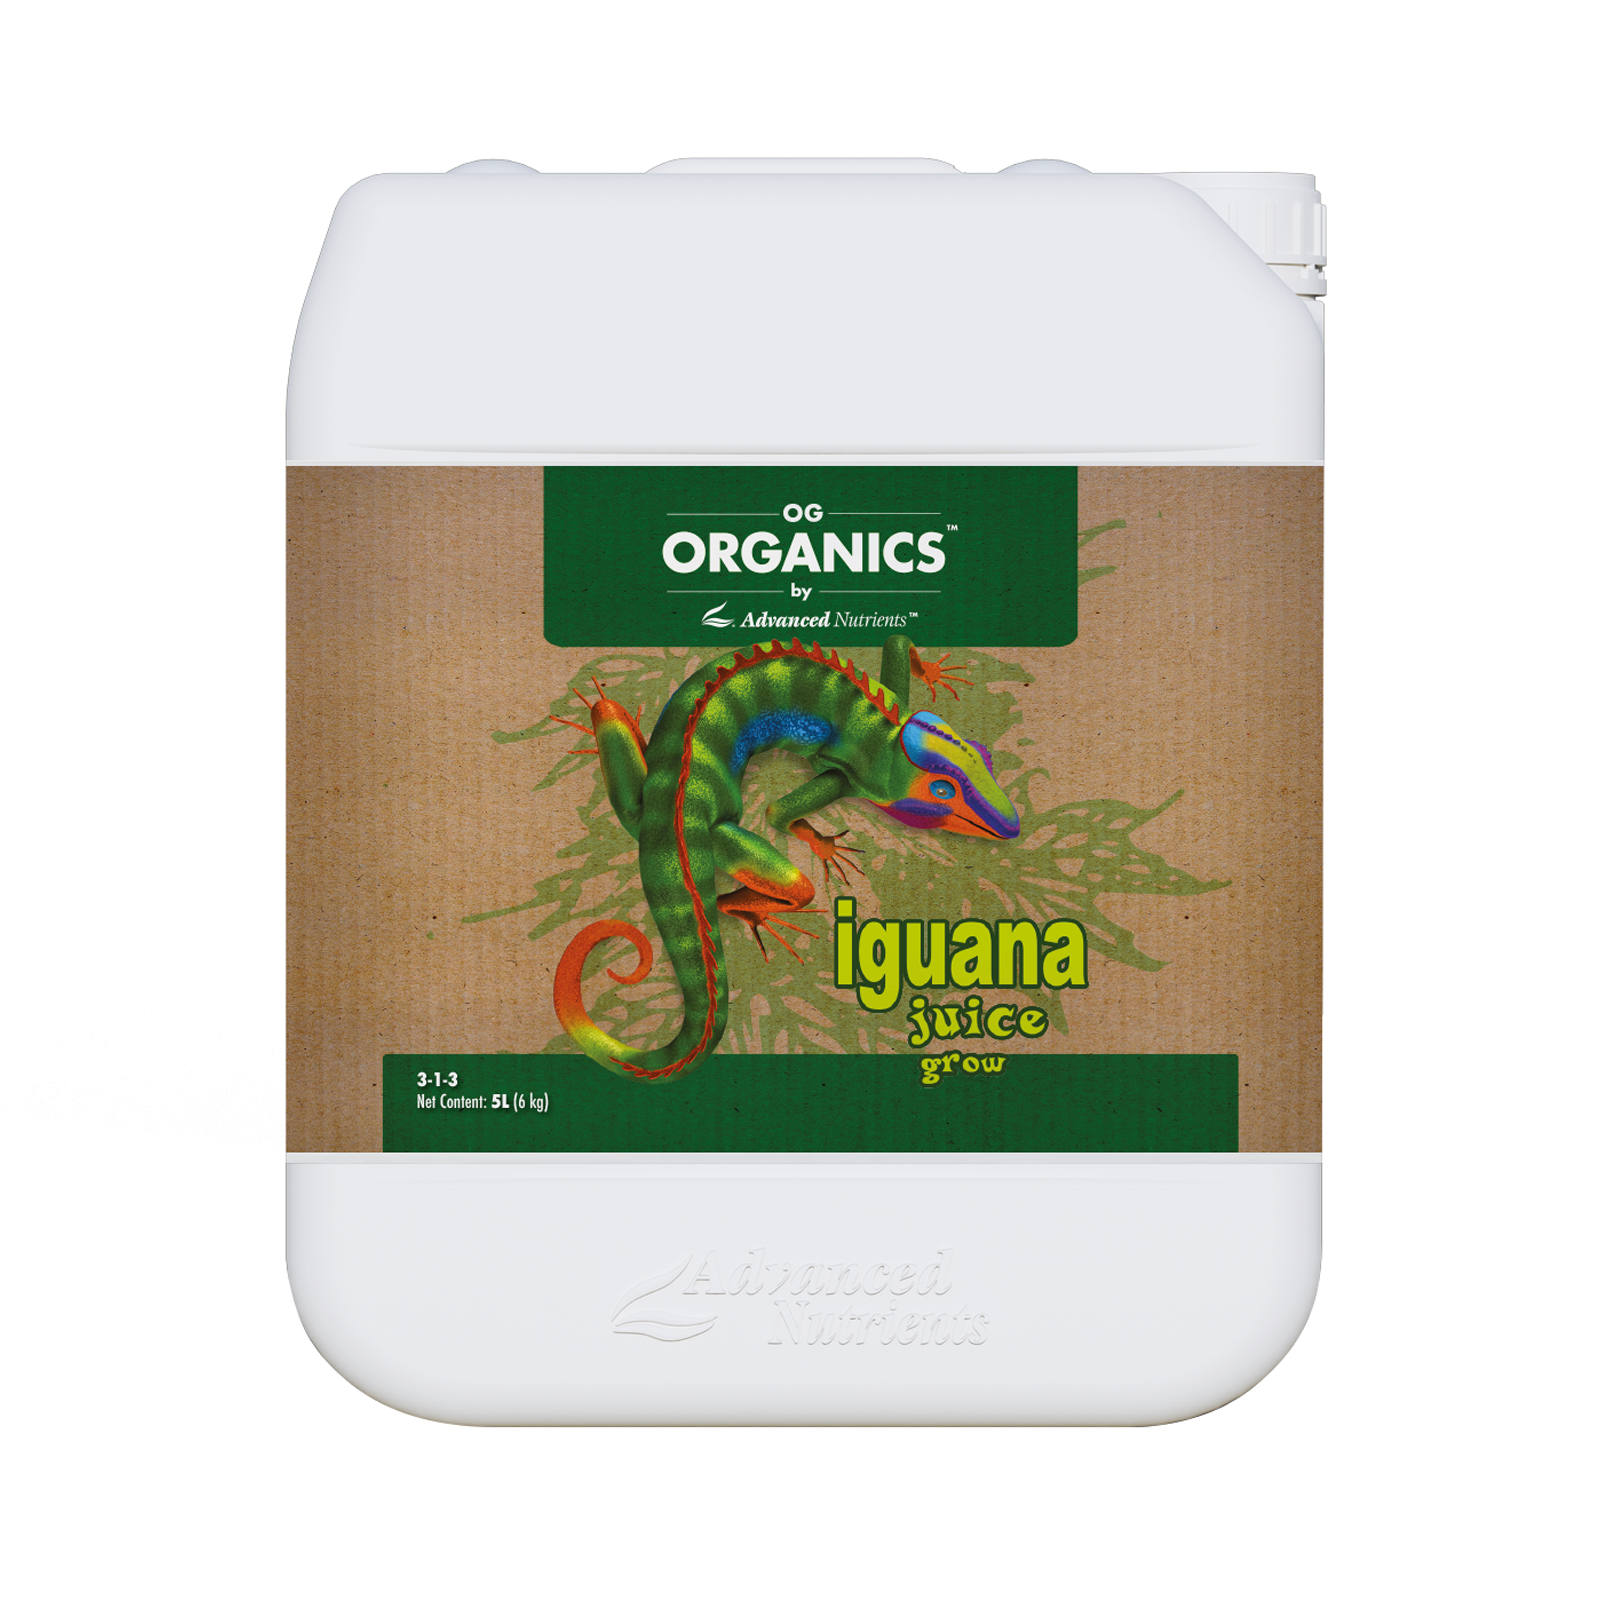 Nutrients Advanced Nutrients - OG Organics Iguana Juice Grow